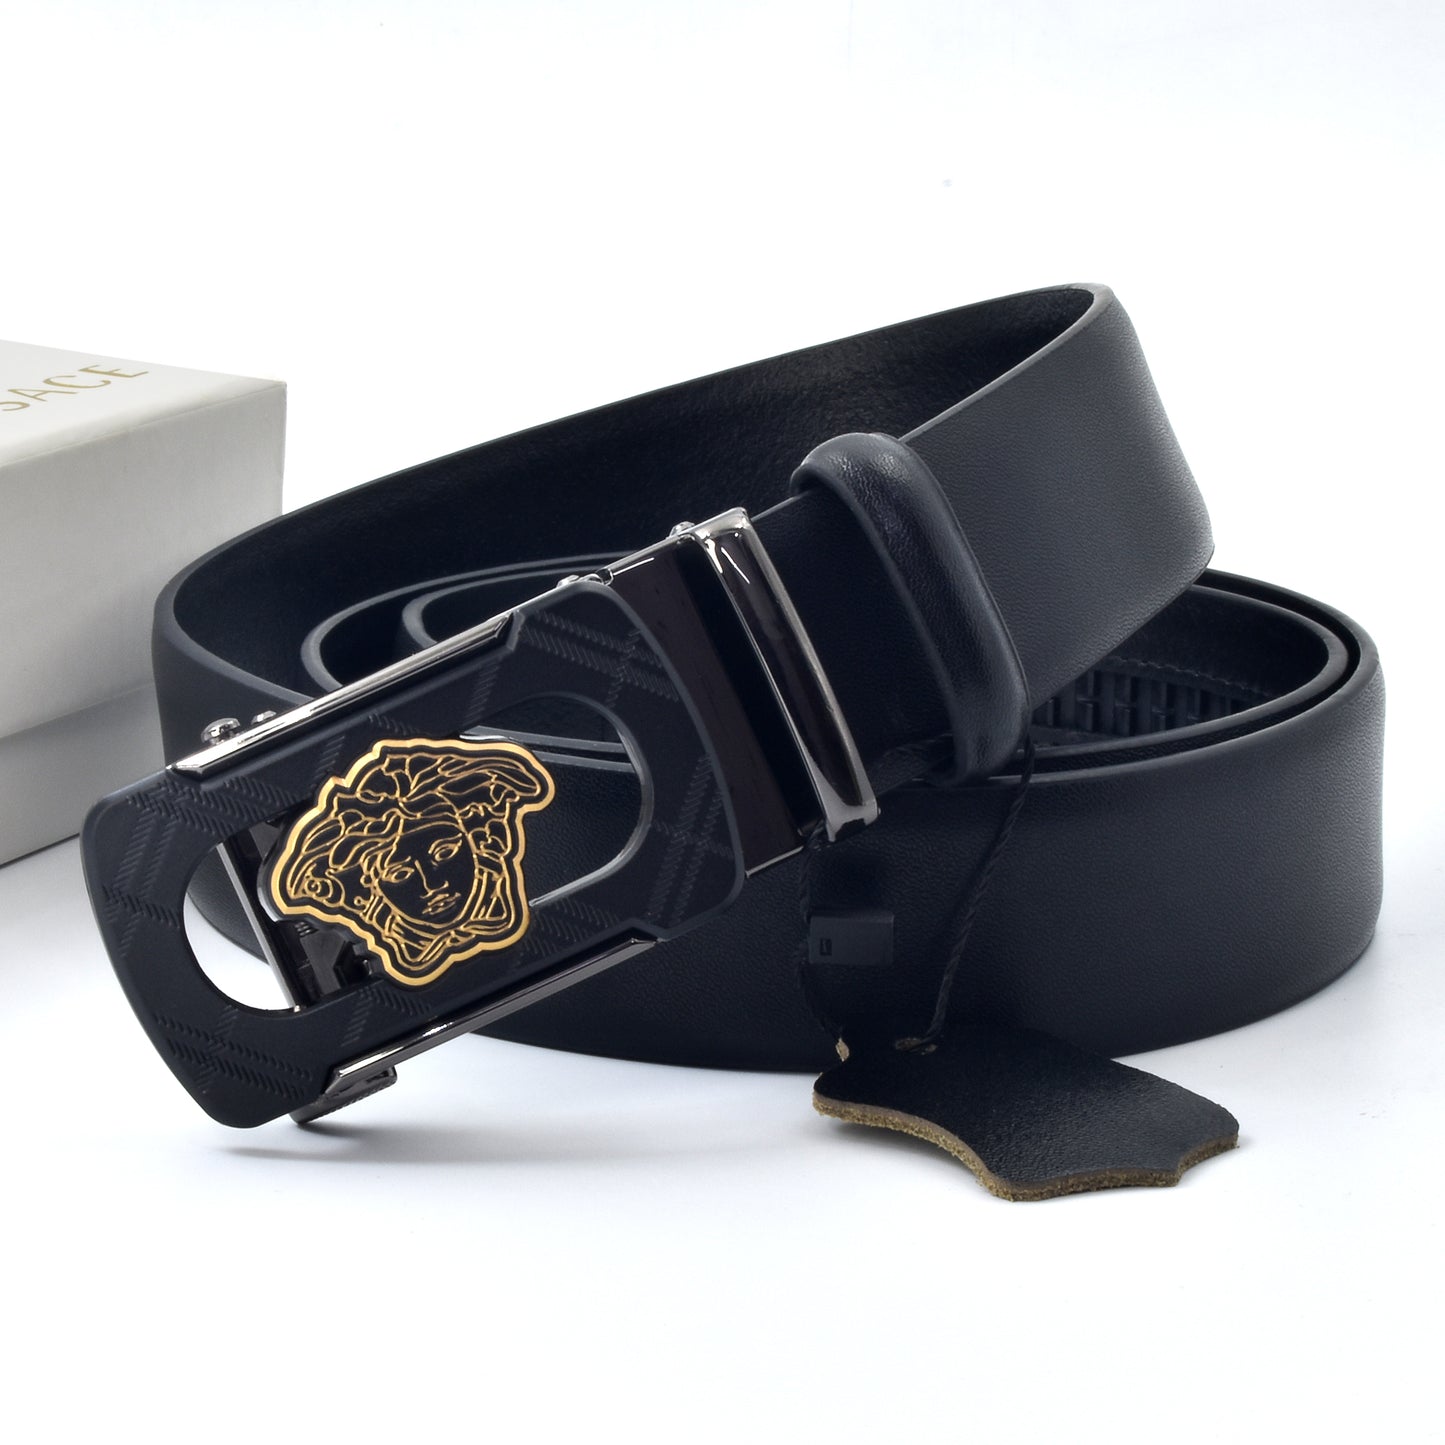 Premium Quality Gear Buckles Belt | VRS Belt 1001 B